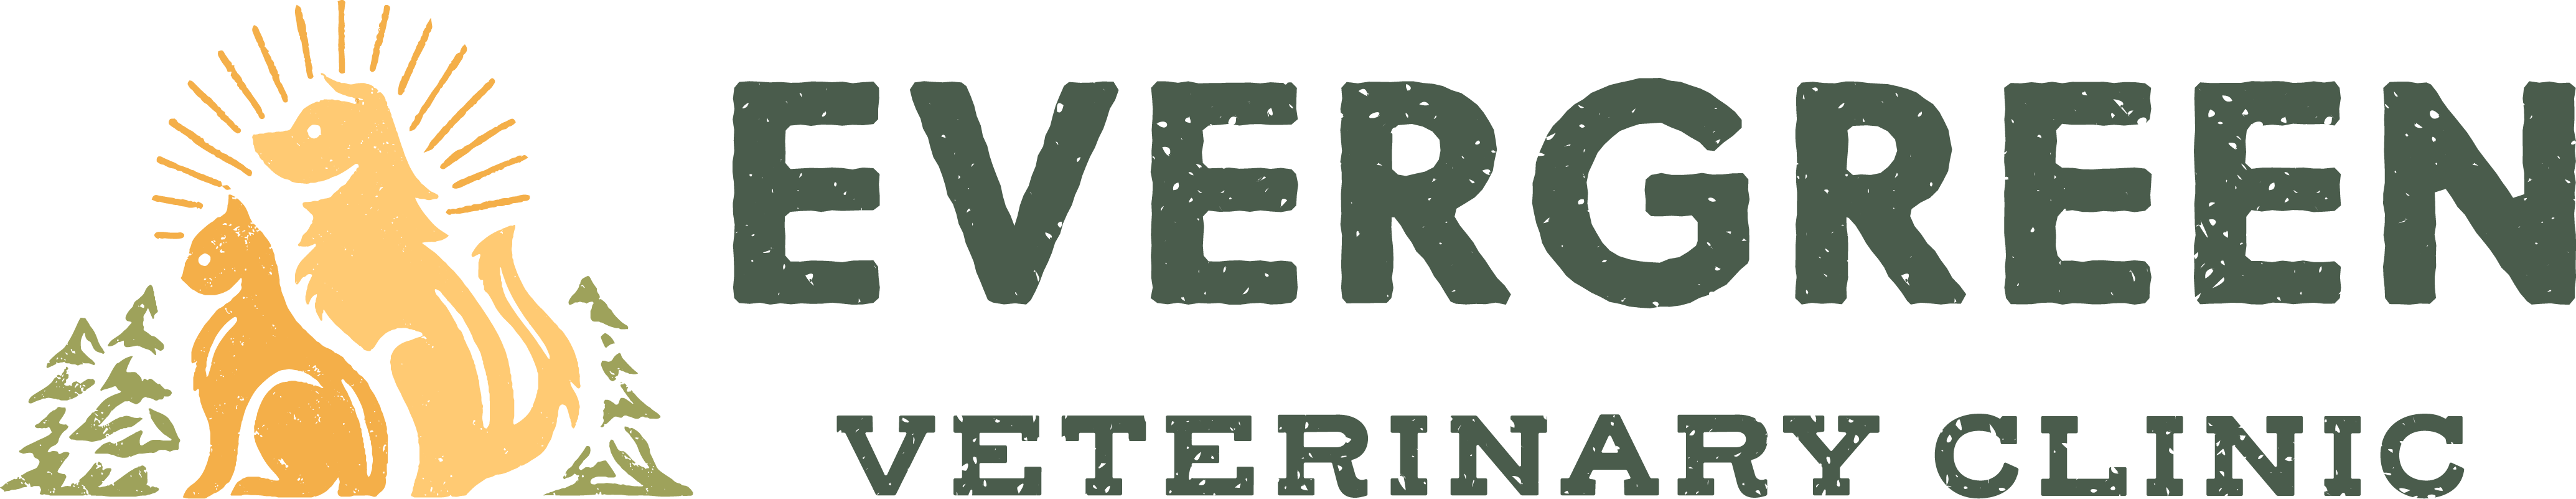 Evergreen Veterinary Clinic Landscape aspect ratio